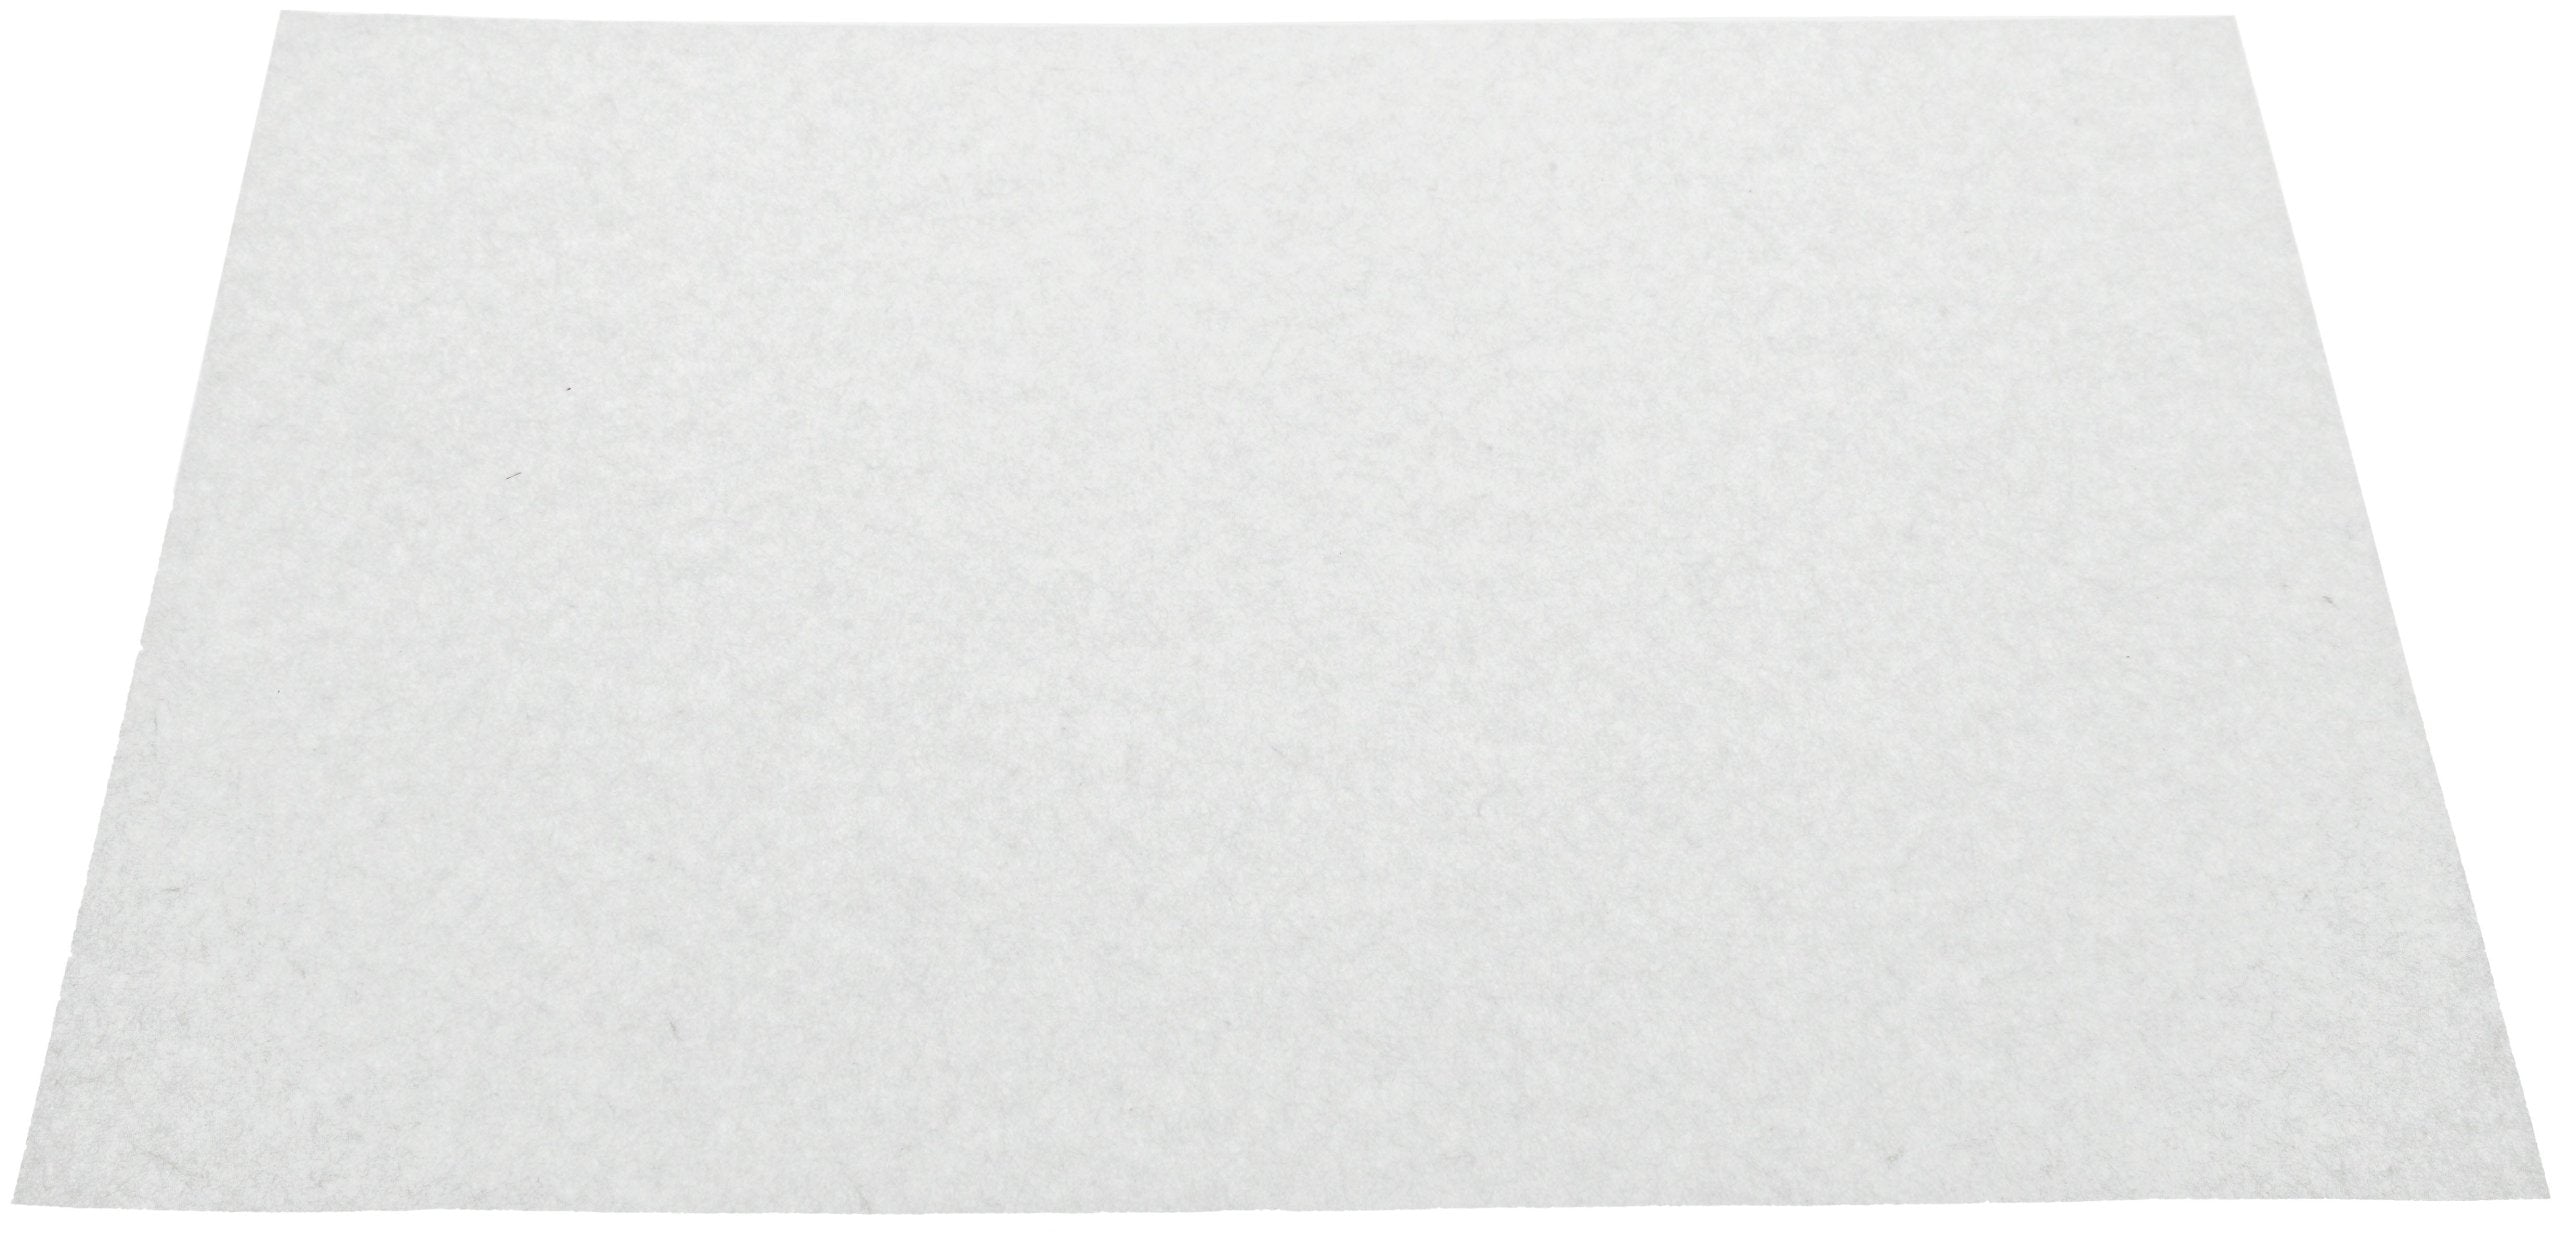 Whatman 10426880 Blotting Paper, Pure Cellulose, Grade GB003 Sheets, 10 x 10cm, 50/pk